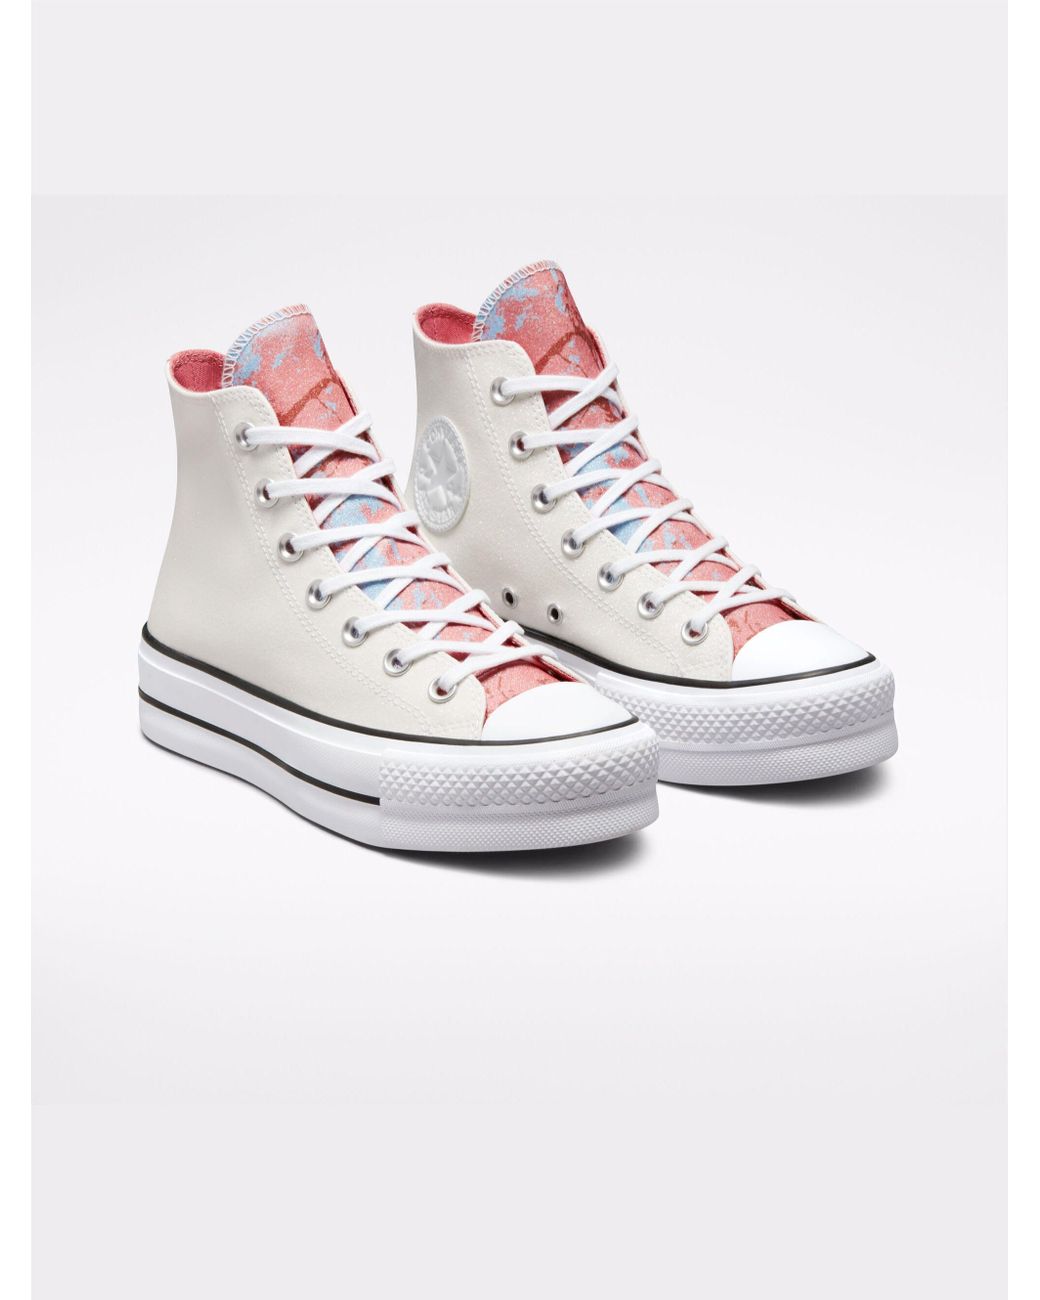 Converse Sneakers Alte Platform Glitter White Pink | Lyst